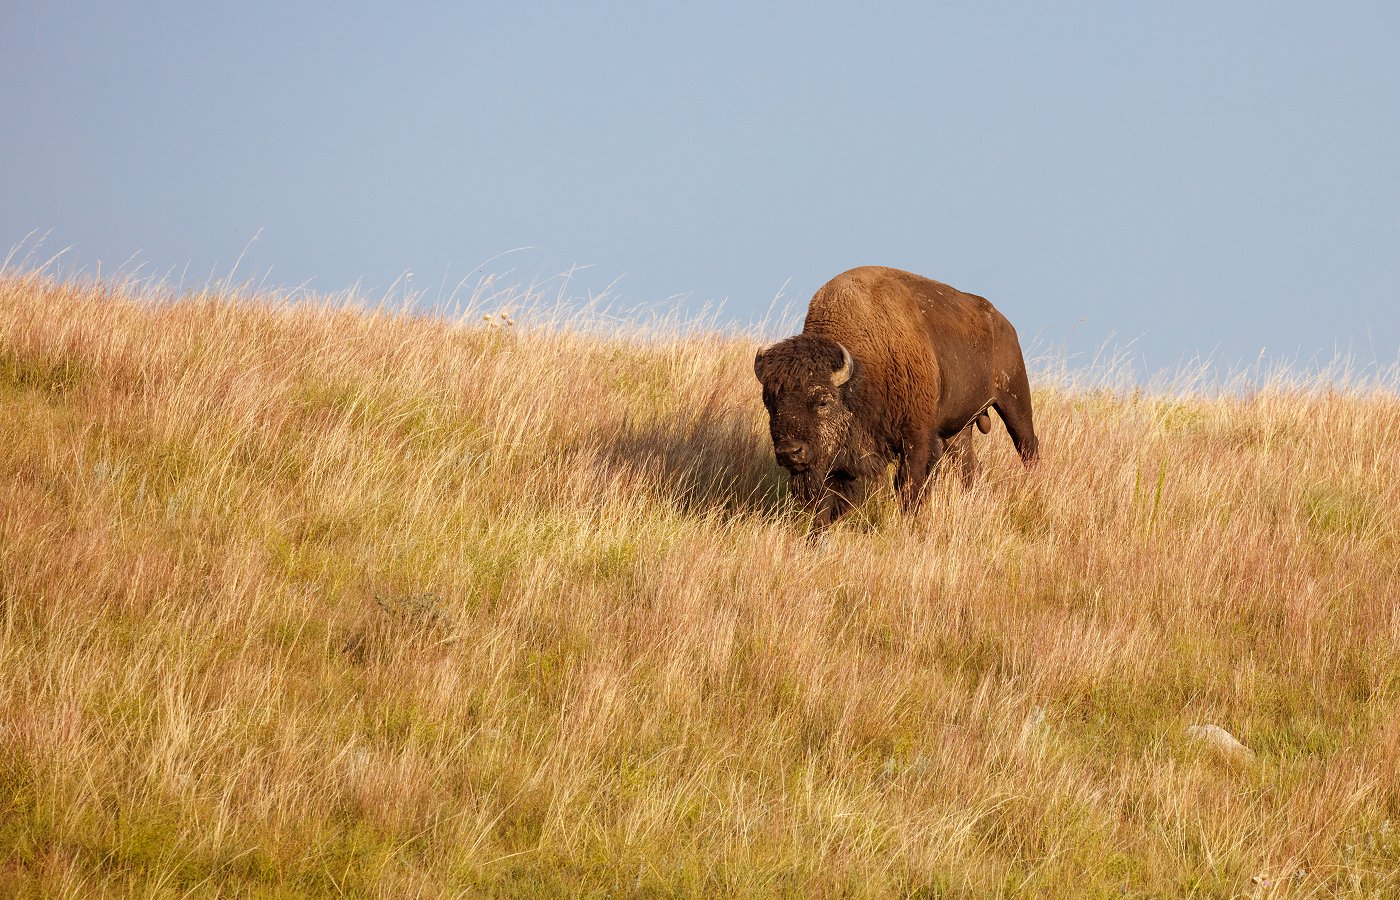 American Bison on the Great Plains grasslands